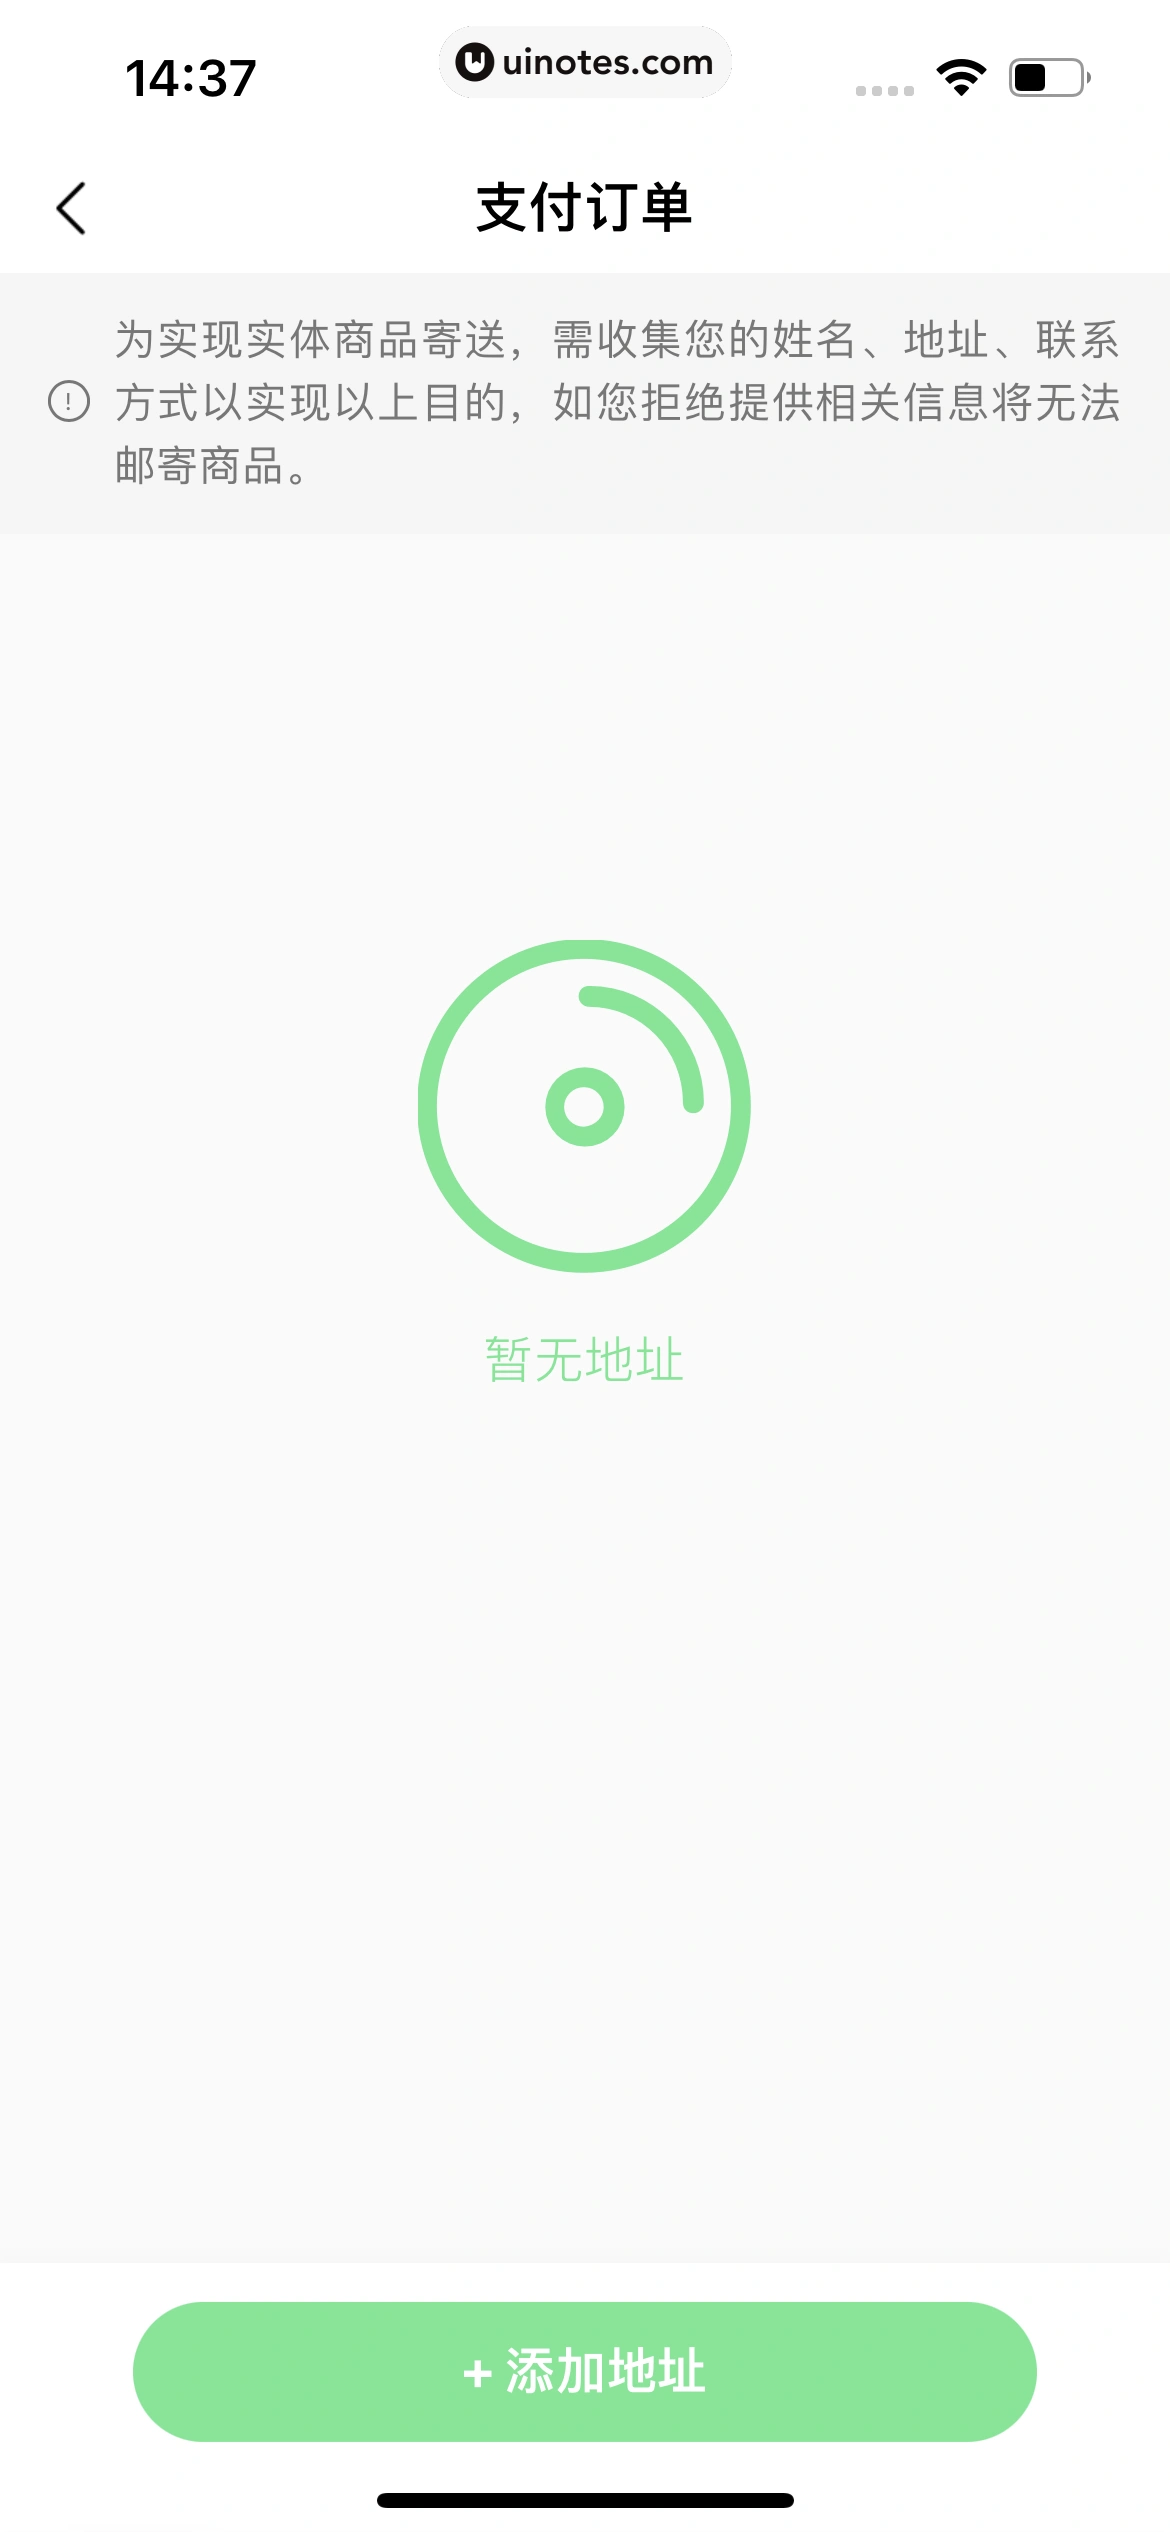 QQ音乐 App 截图 101 - UI Notes